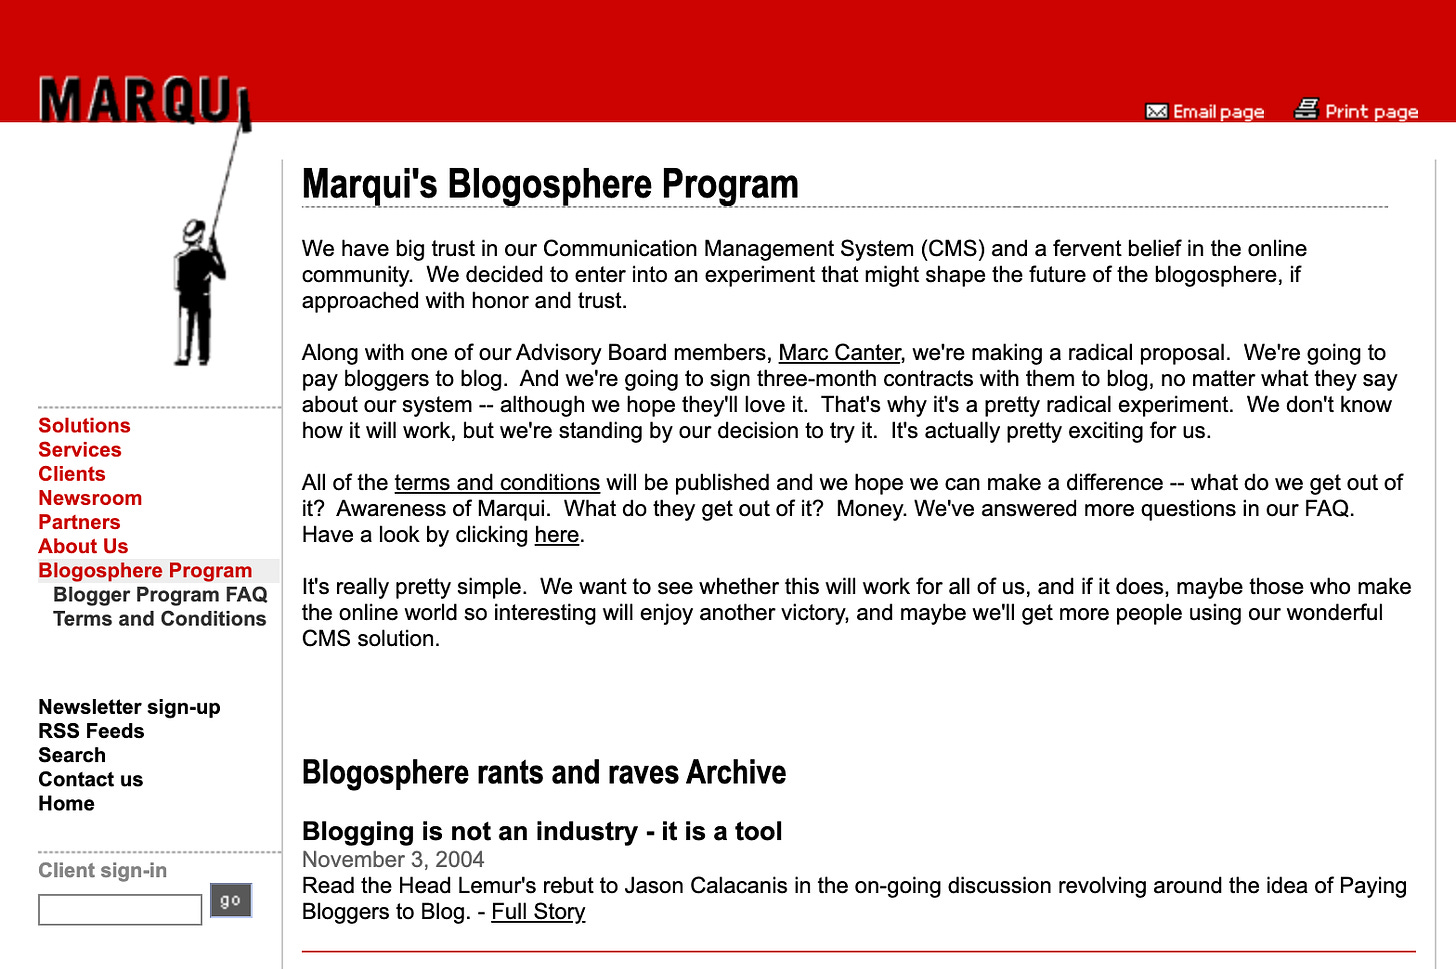 Marqui blogosphere program